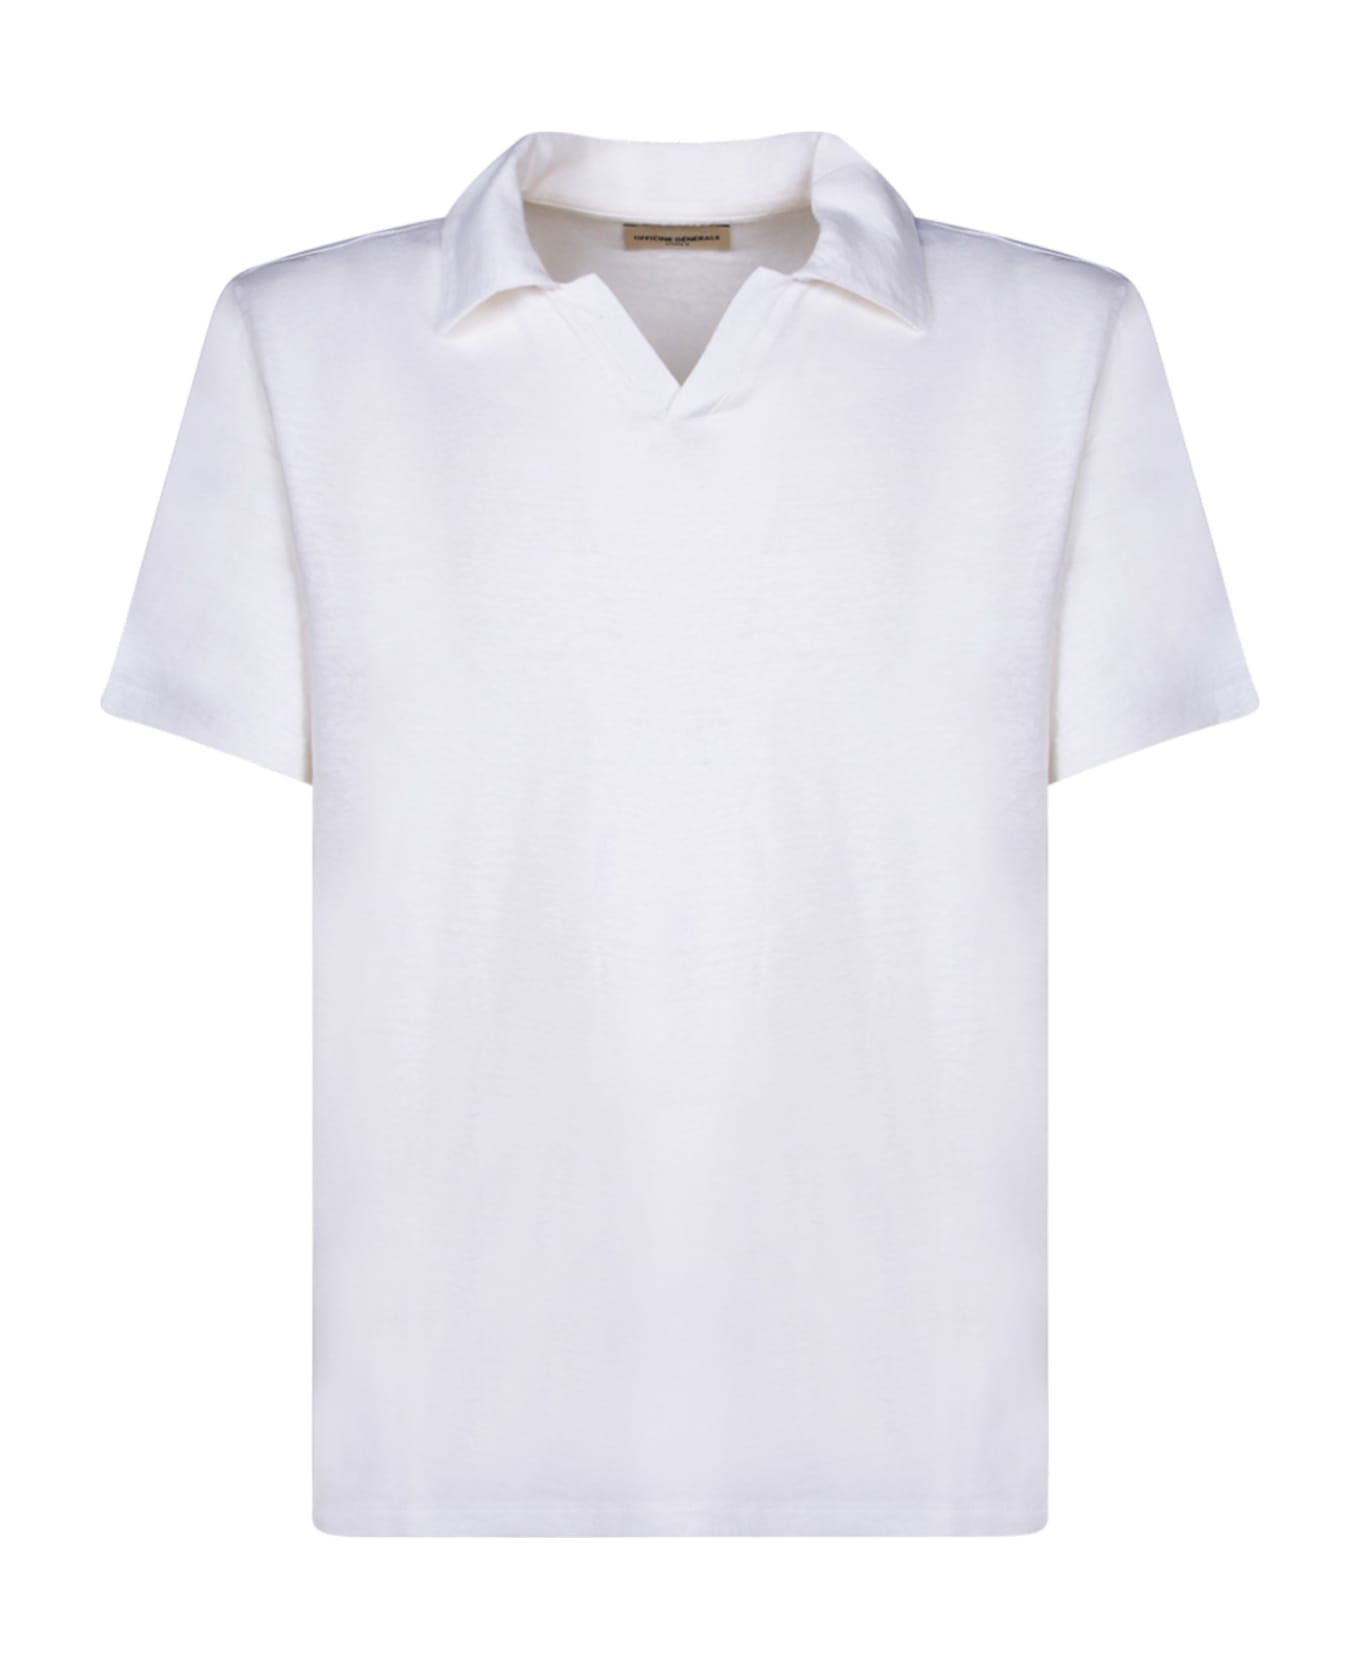 Officine Générale Short Sleeves White Polo Shirt - White